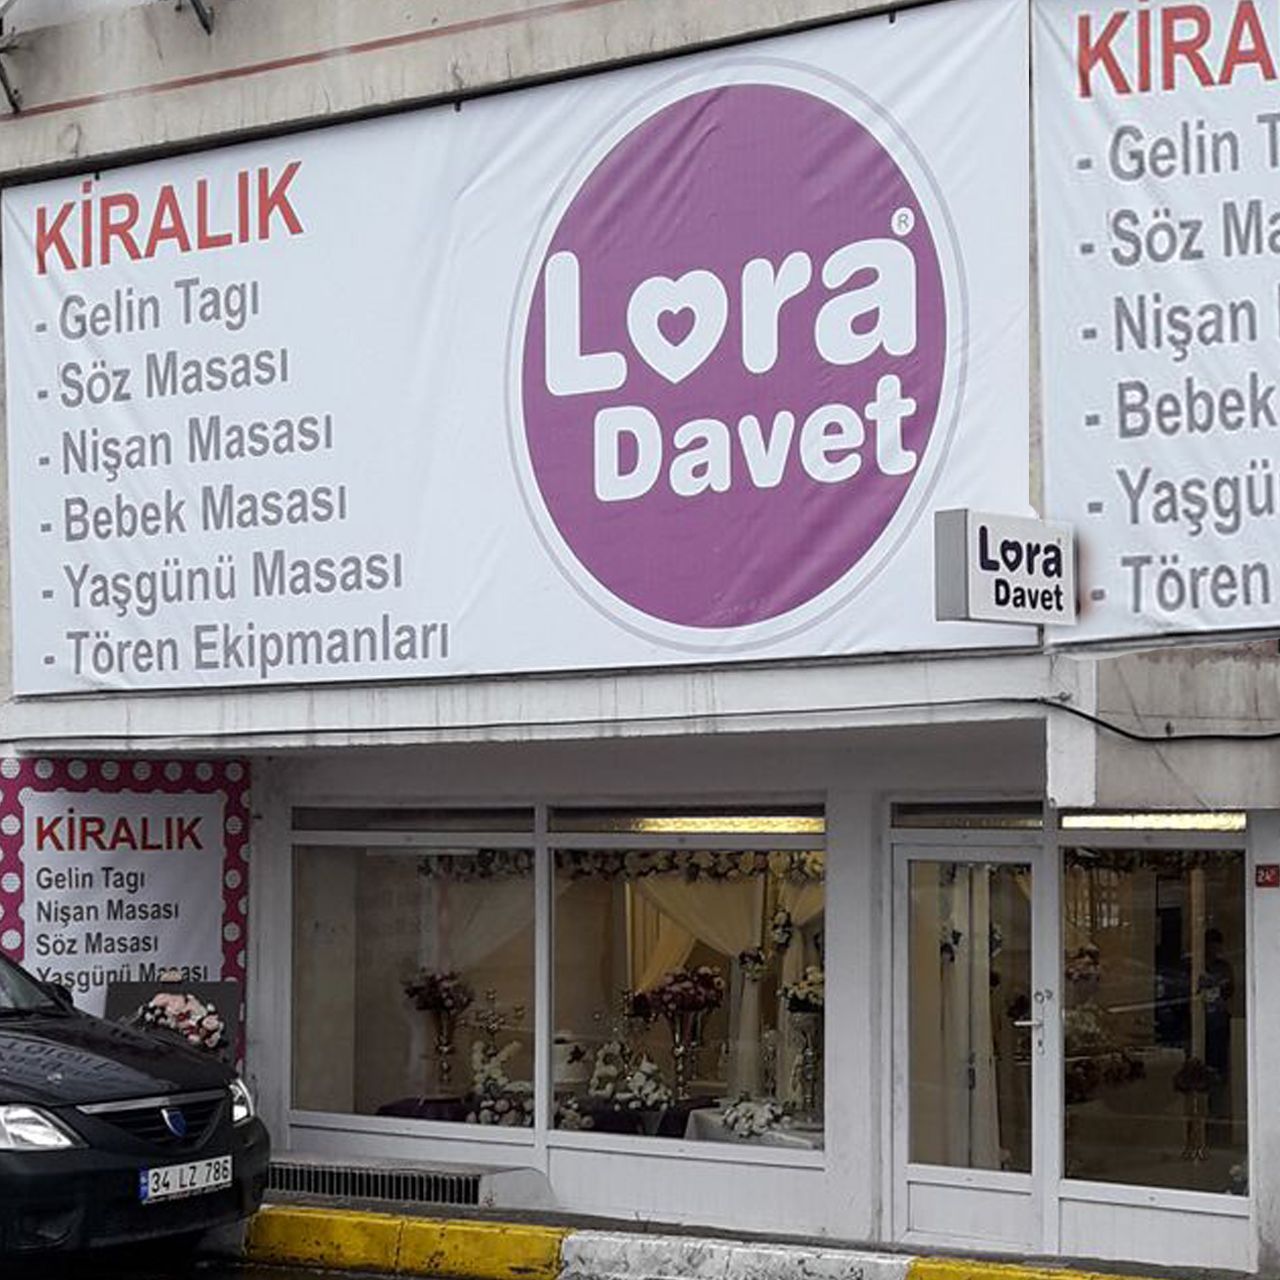 LORA DAVET AVCILAR - İstanbulLORA DAVET AVCILAR Mağazamız